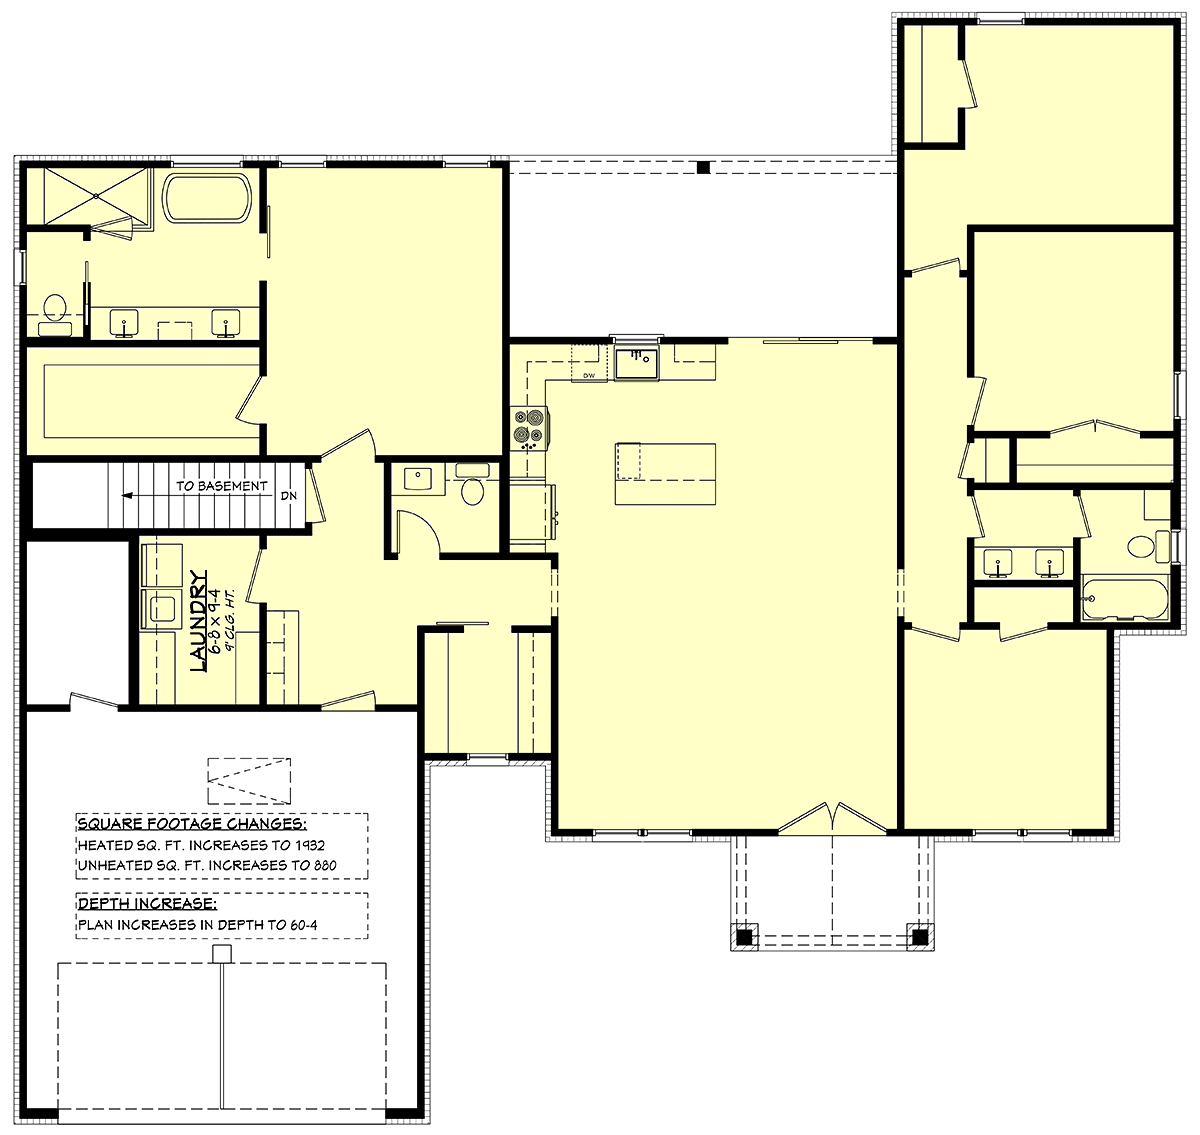 House Plan 82922 Alternate Level One